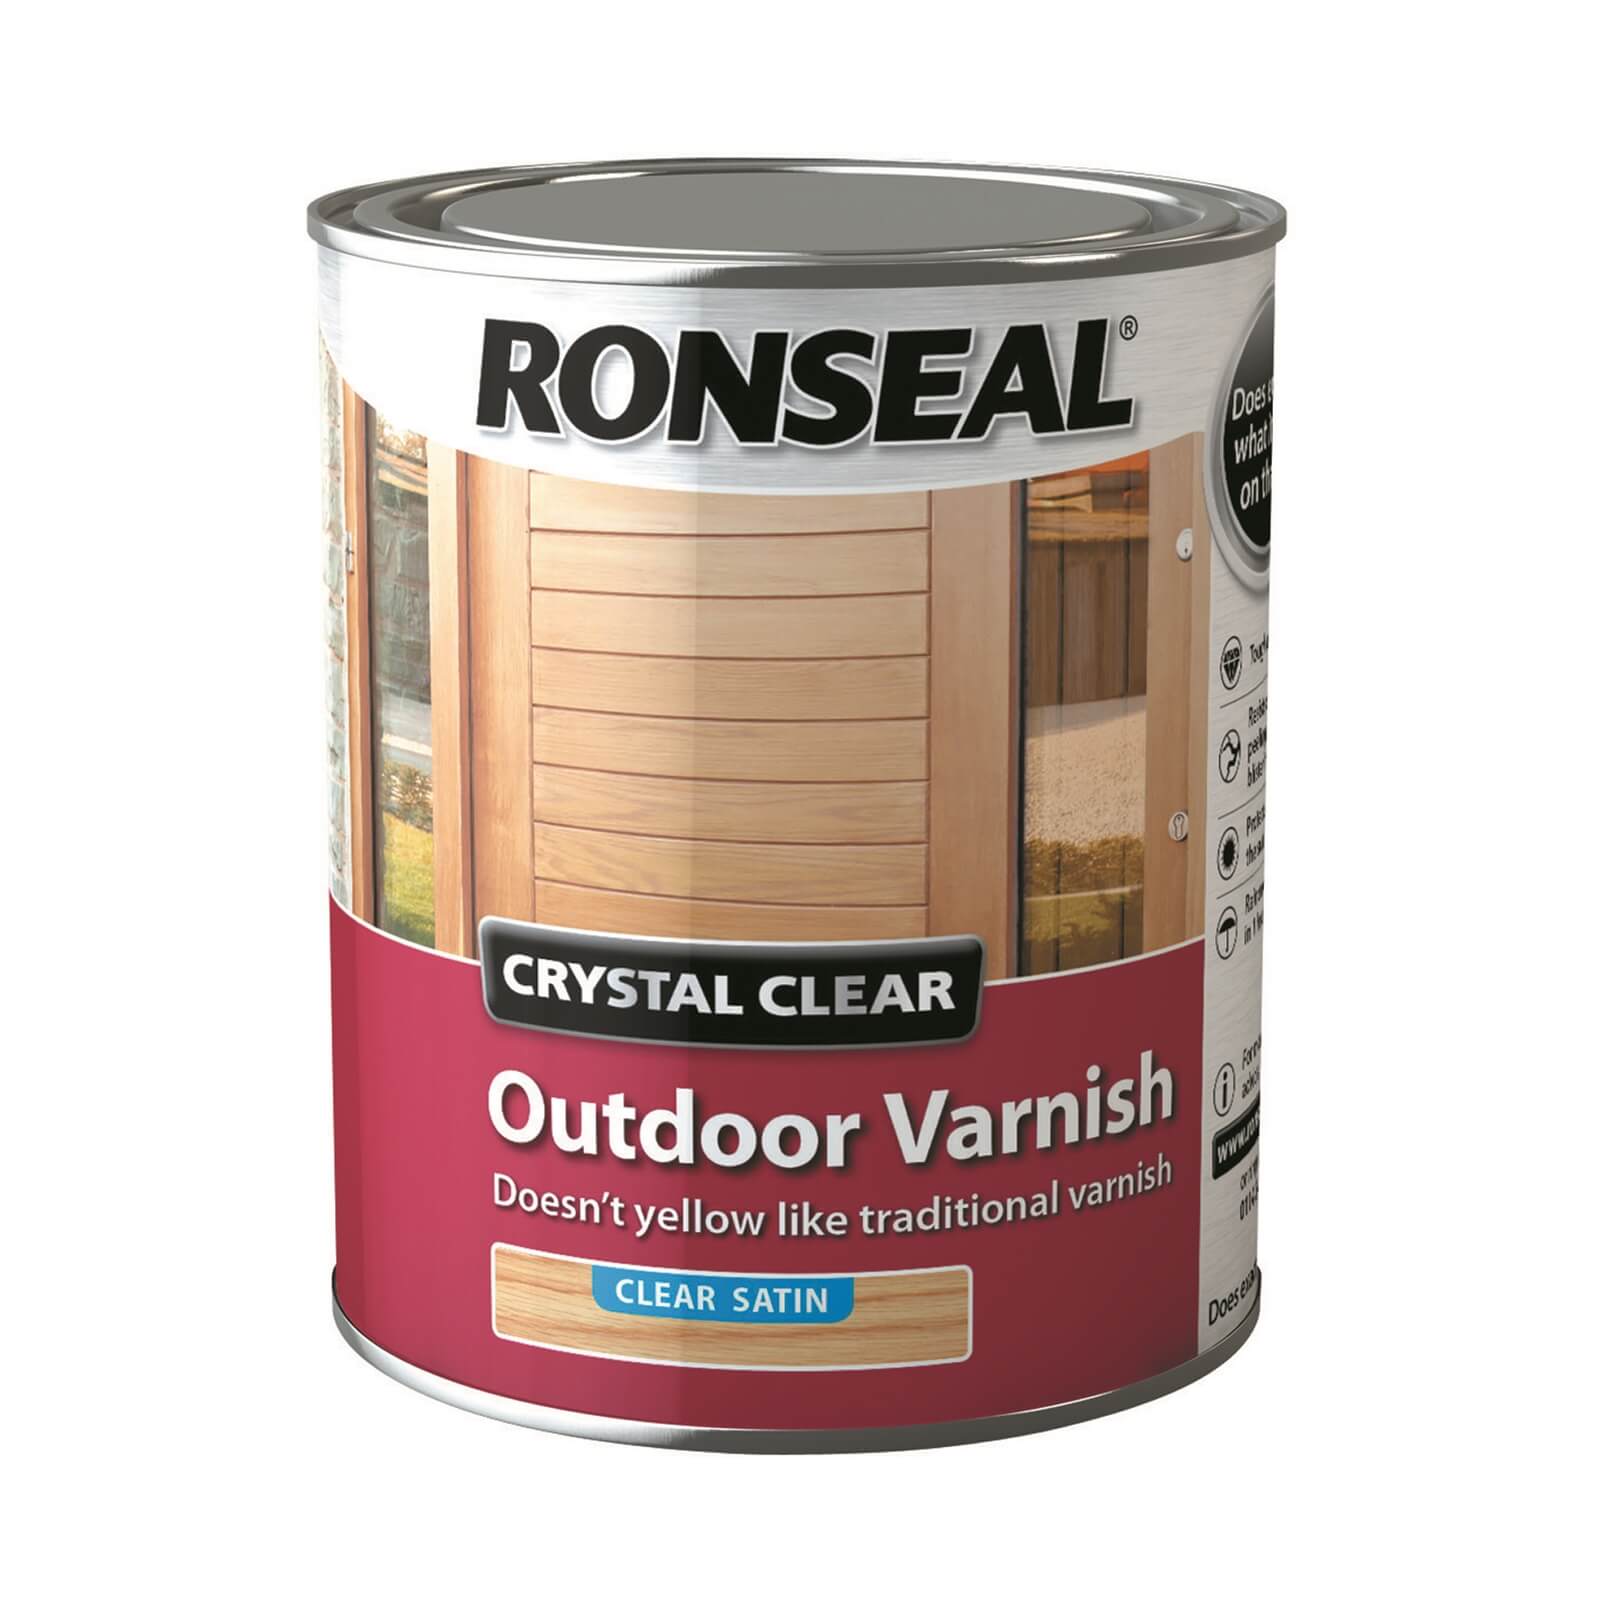 Ronseal Crystal Clear Outdoor Varnish Satin - 750ml